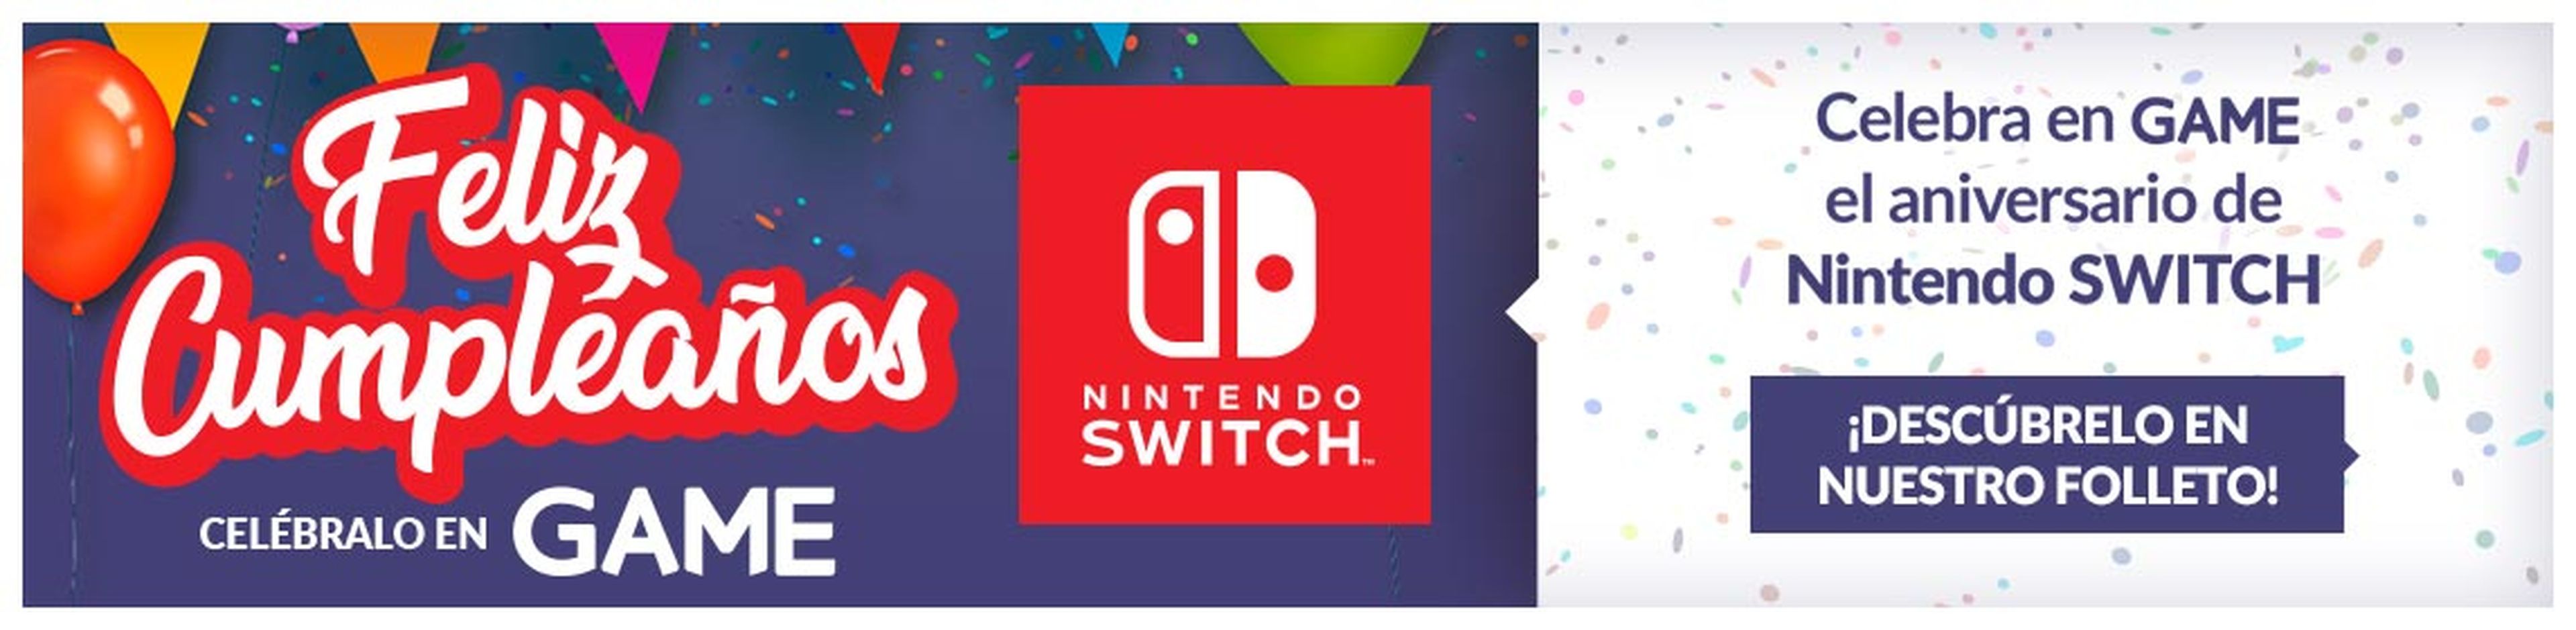 Ofertas de Nintendo Switch en GAME